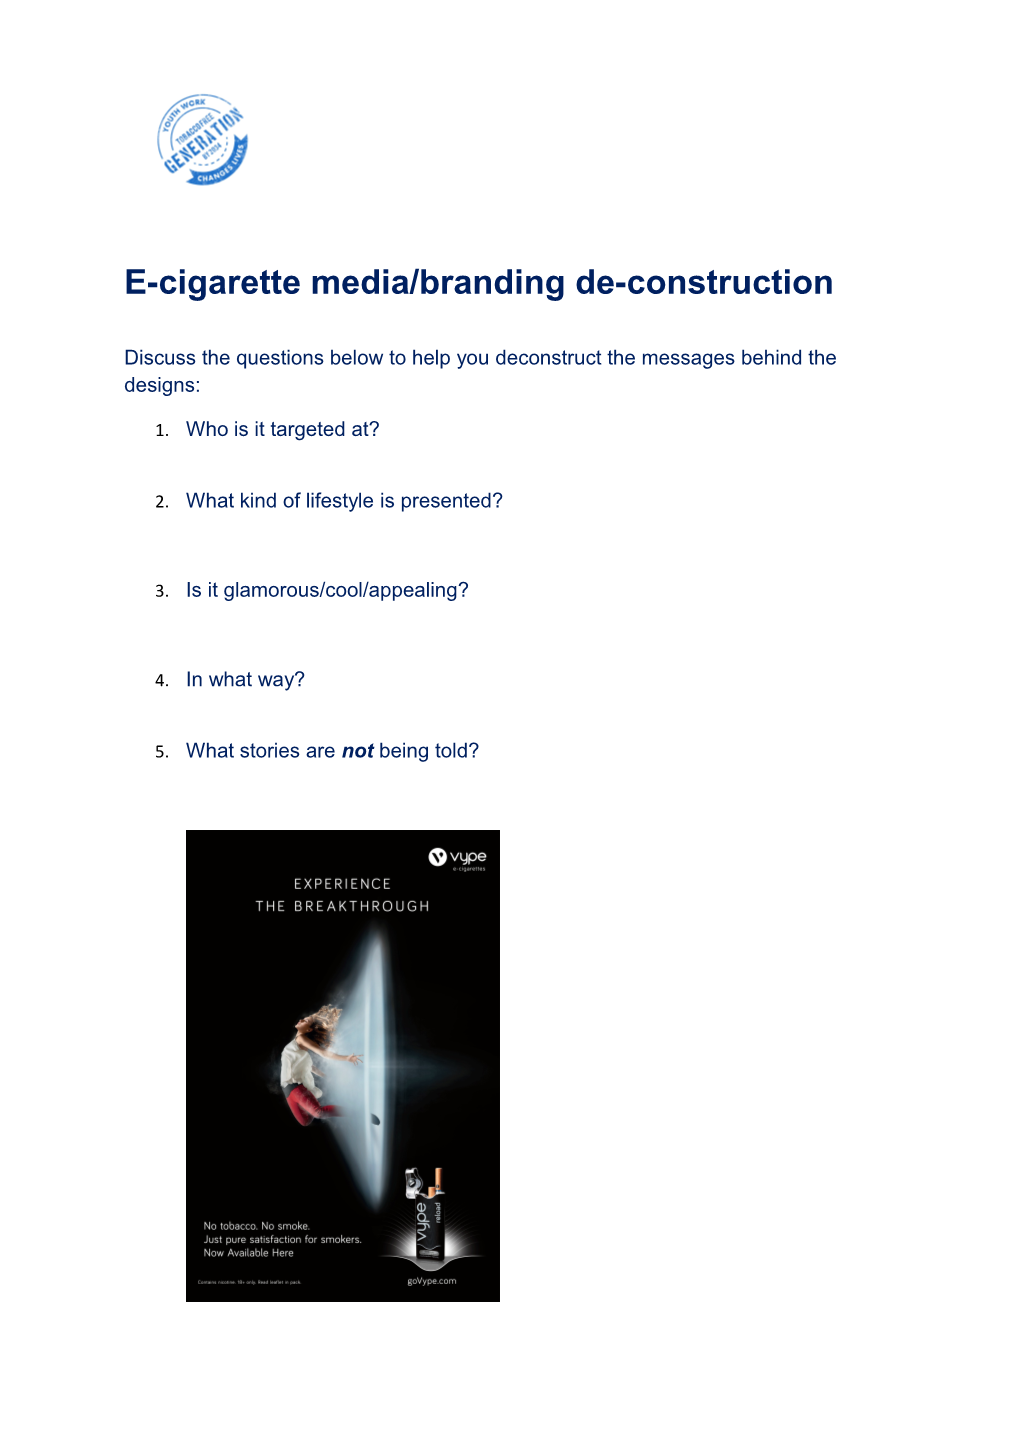 E-Cigarette Media/Branding De-Construction